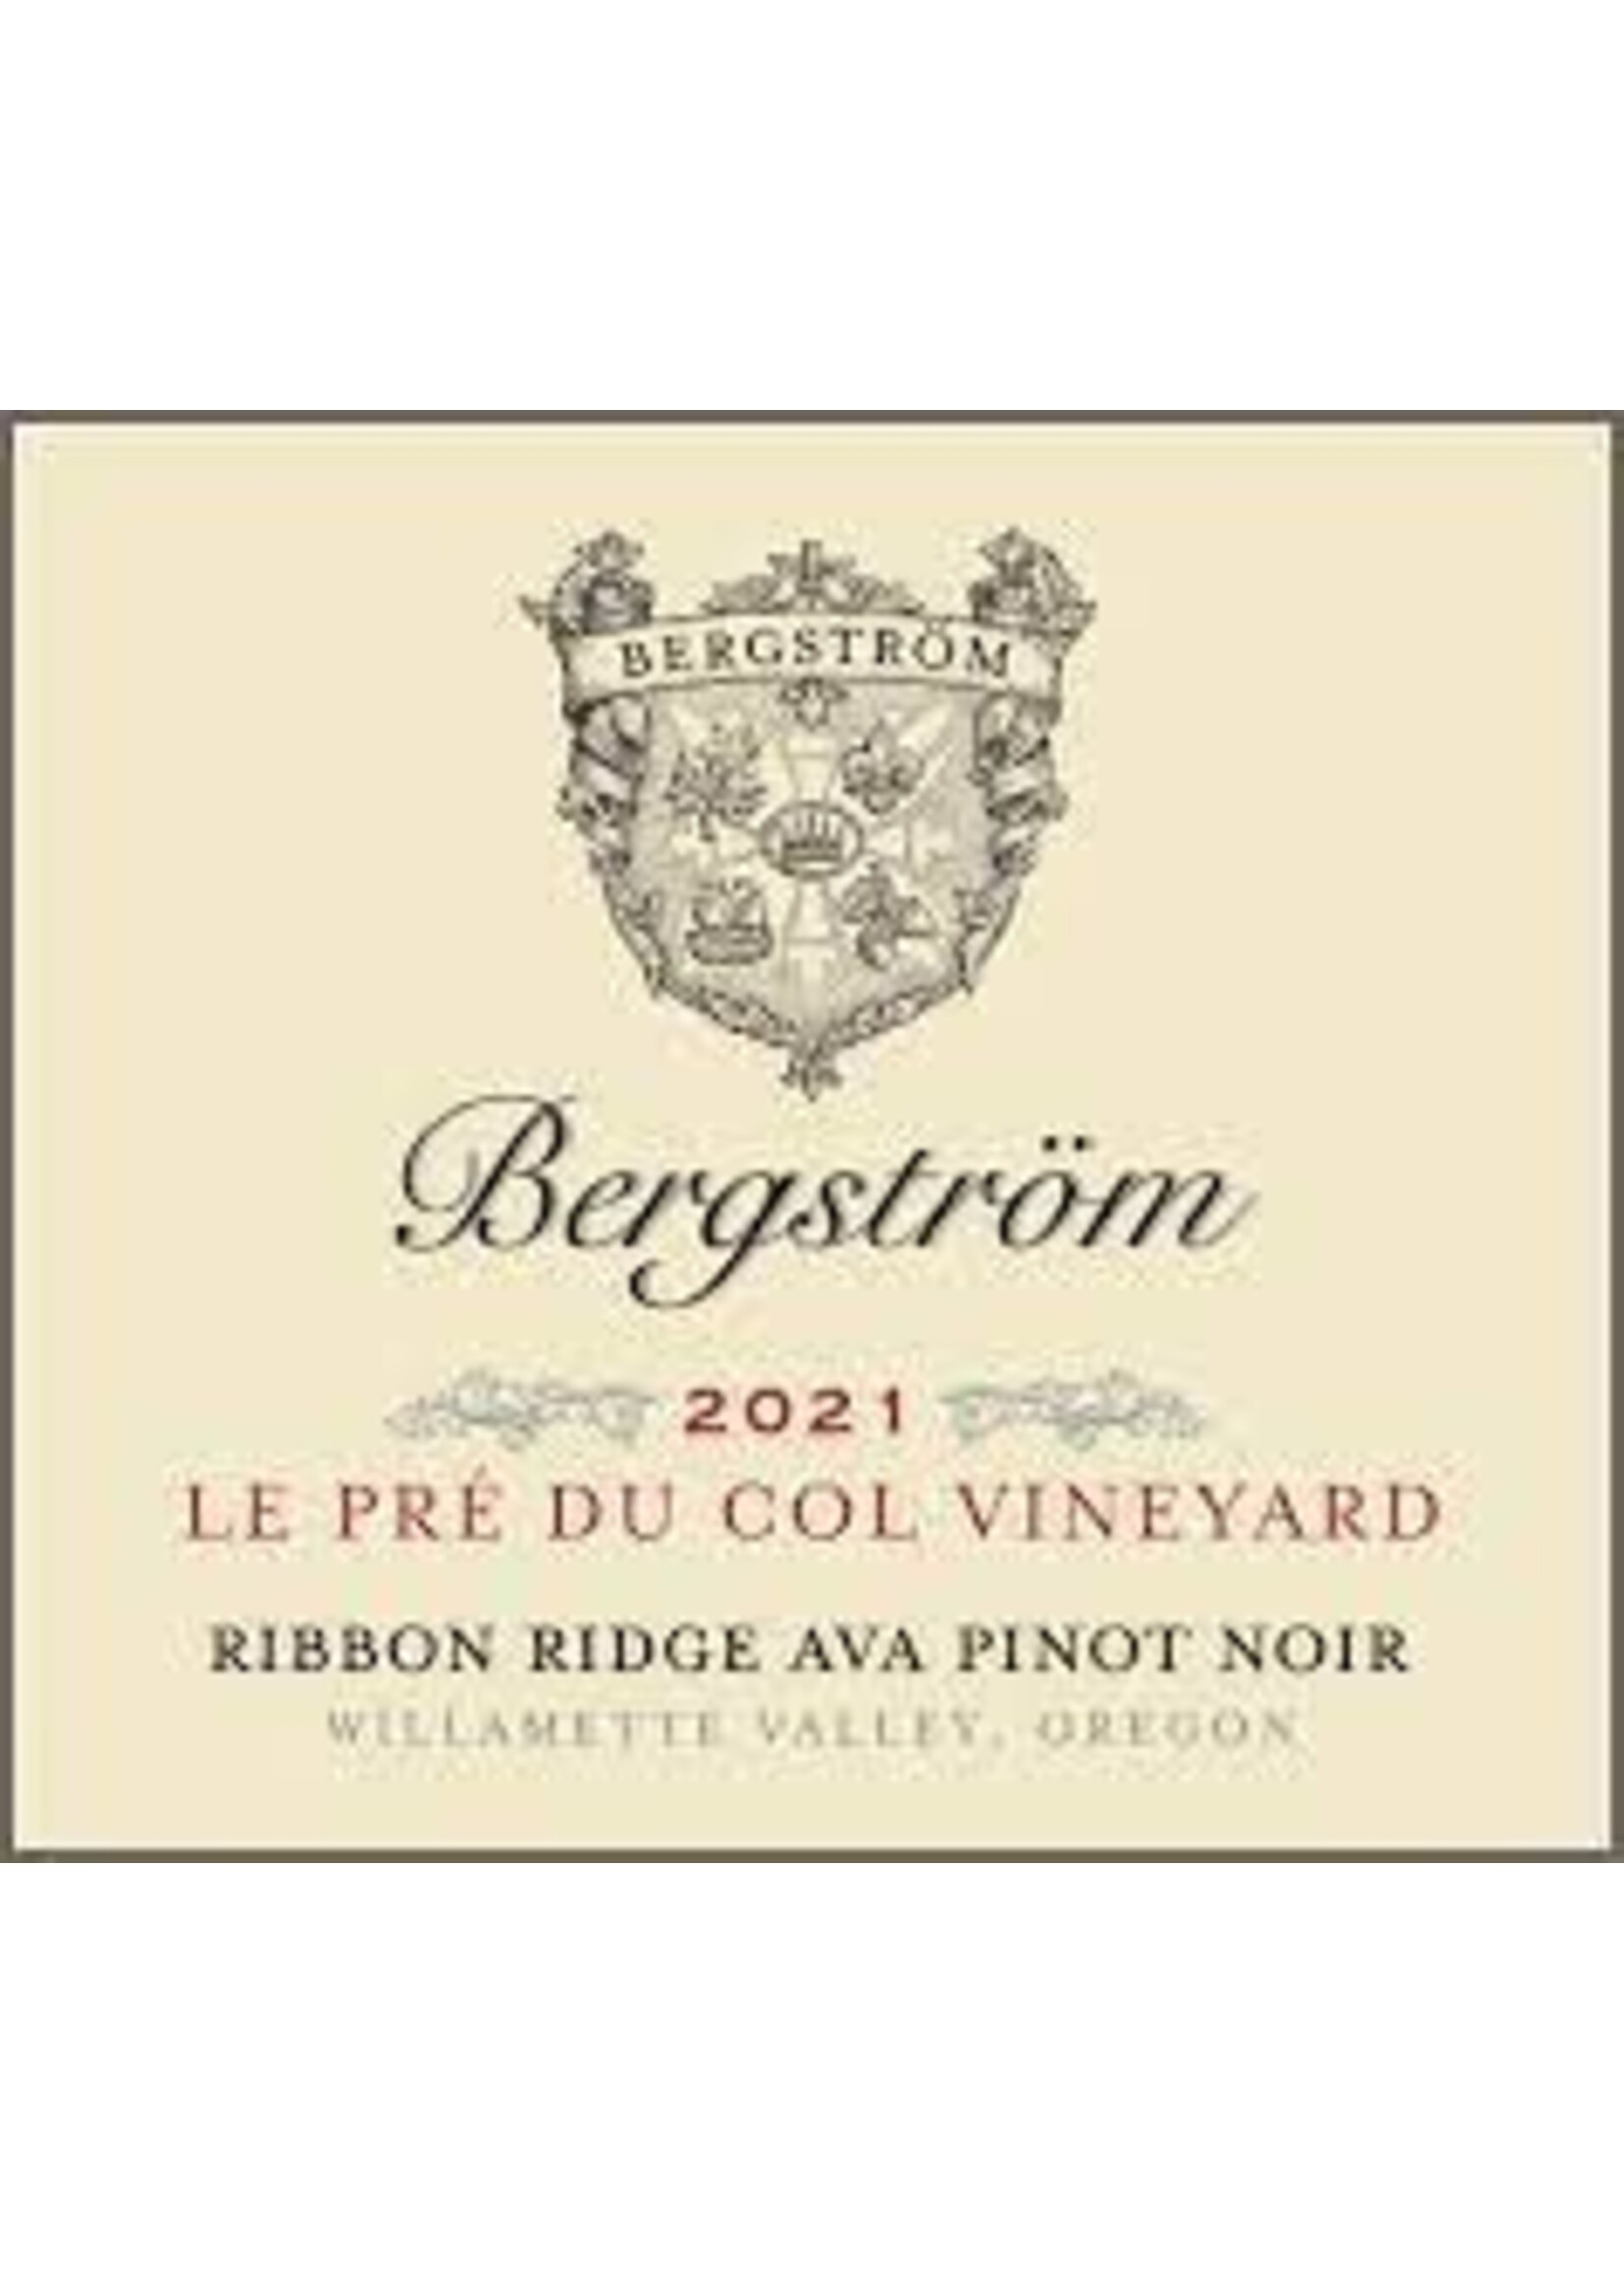 Bergstrom 2021 Pinot Noir Le Pre Du Col Vineyard 750ml